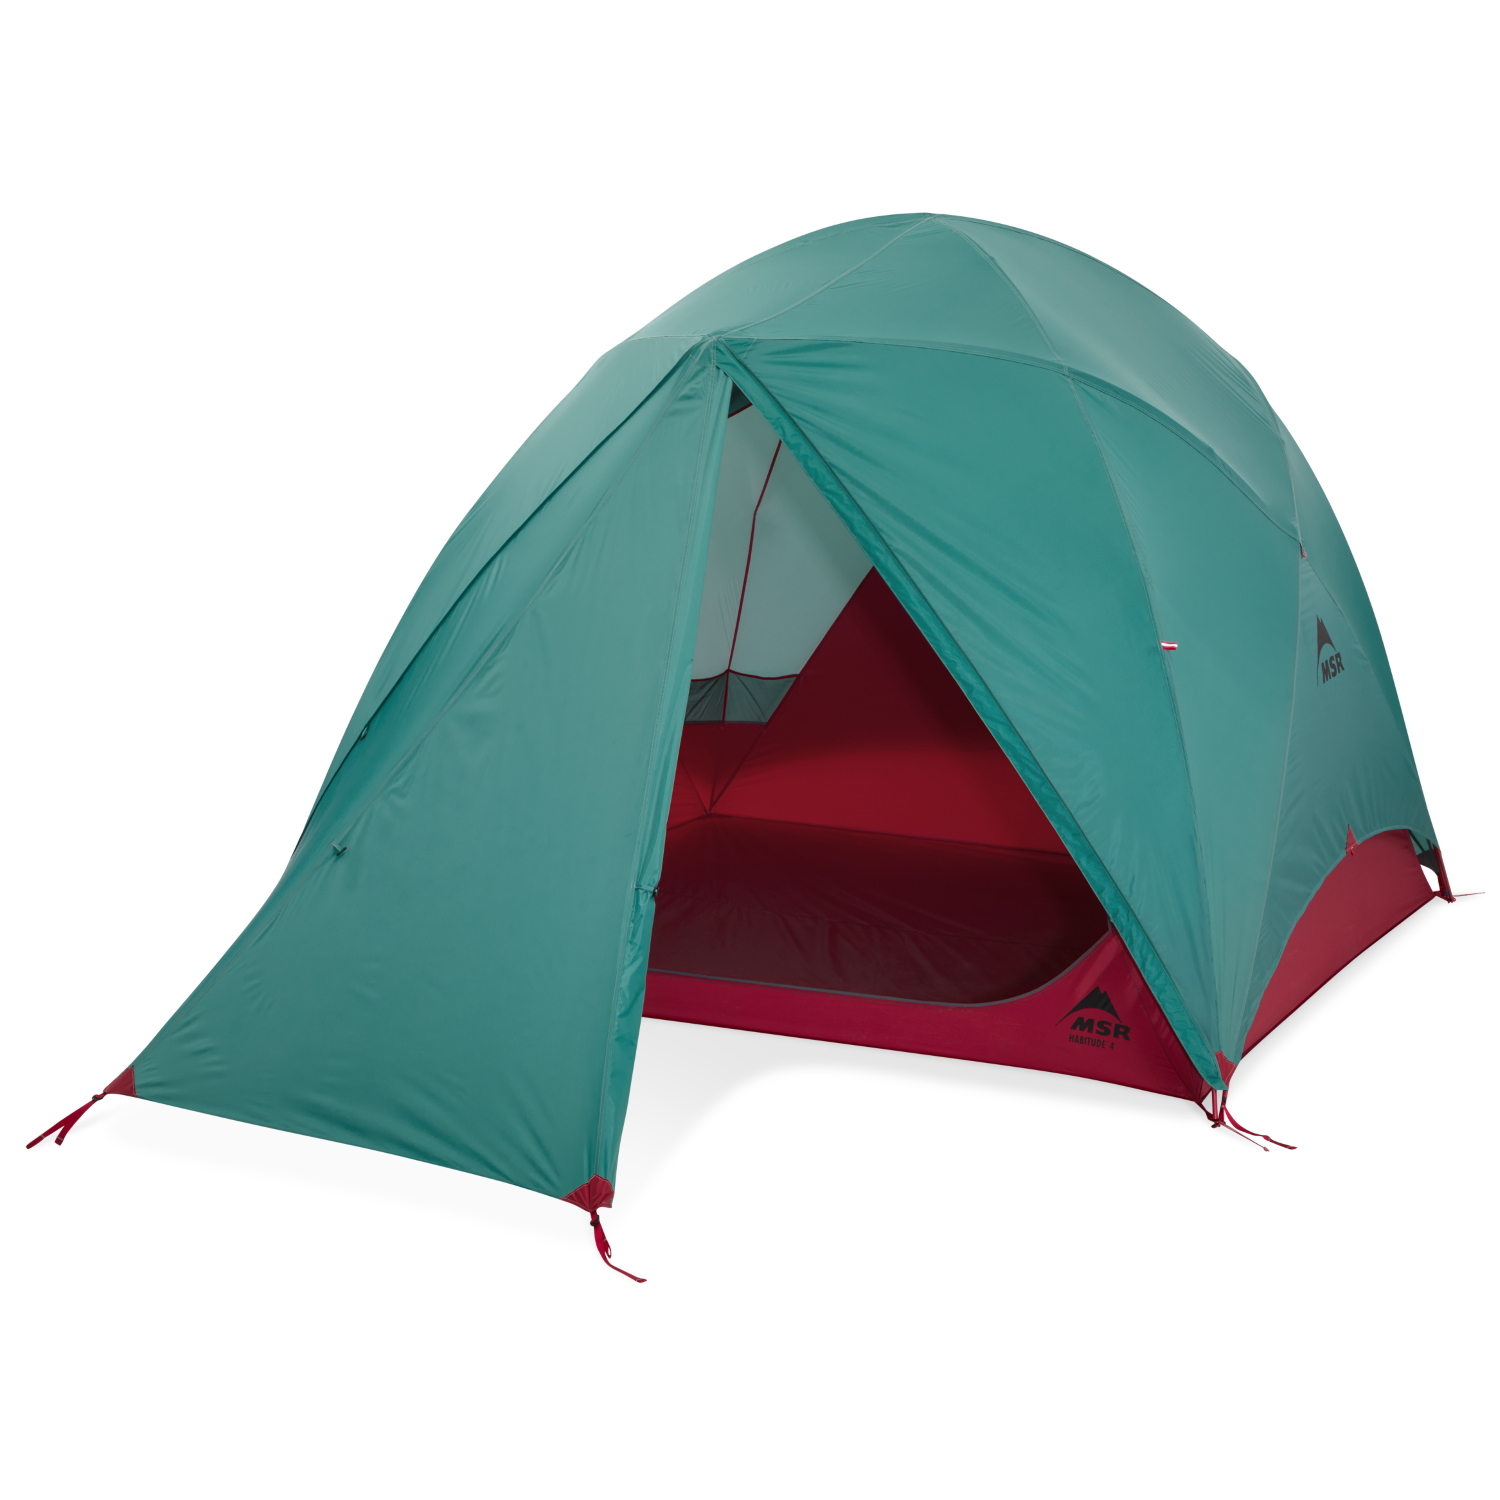 Productfoto van MSR Habitude 4 Tent